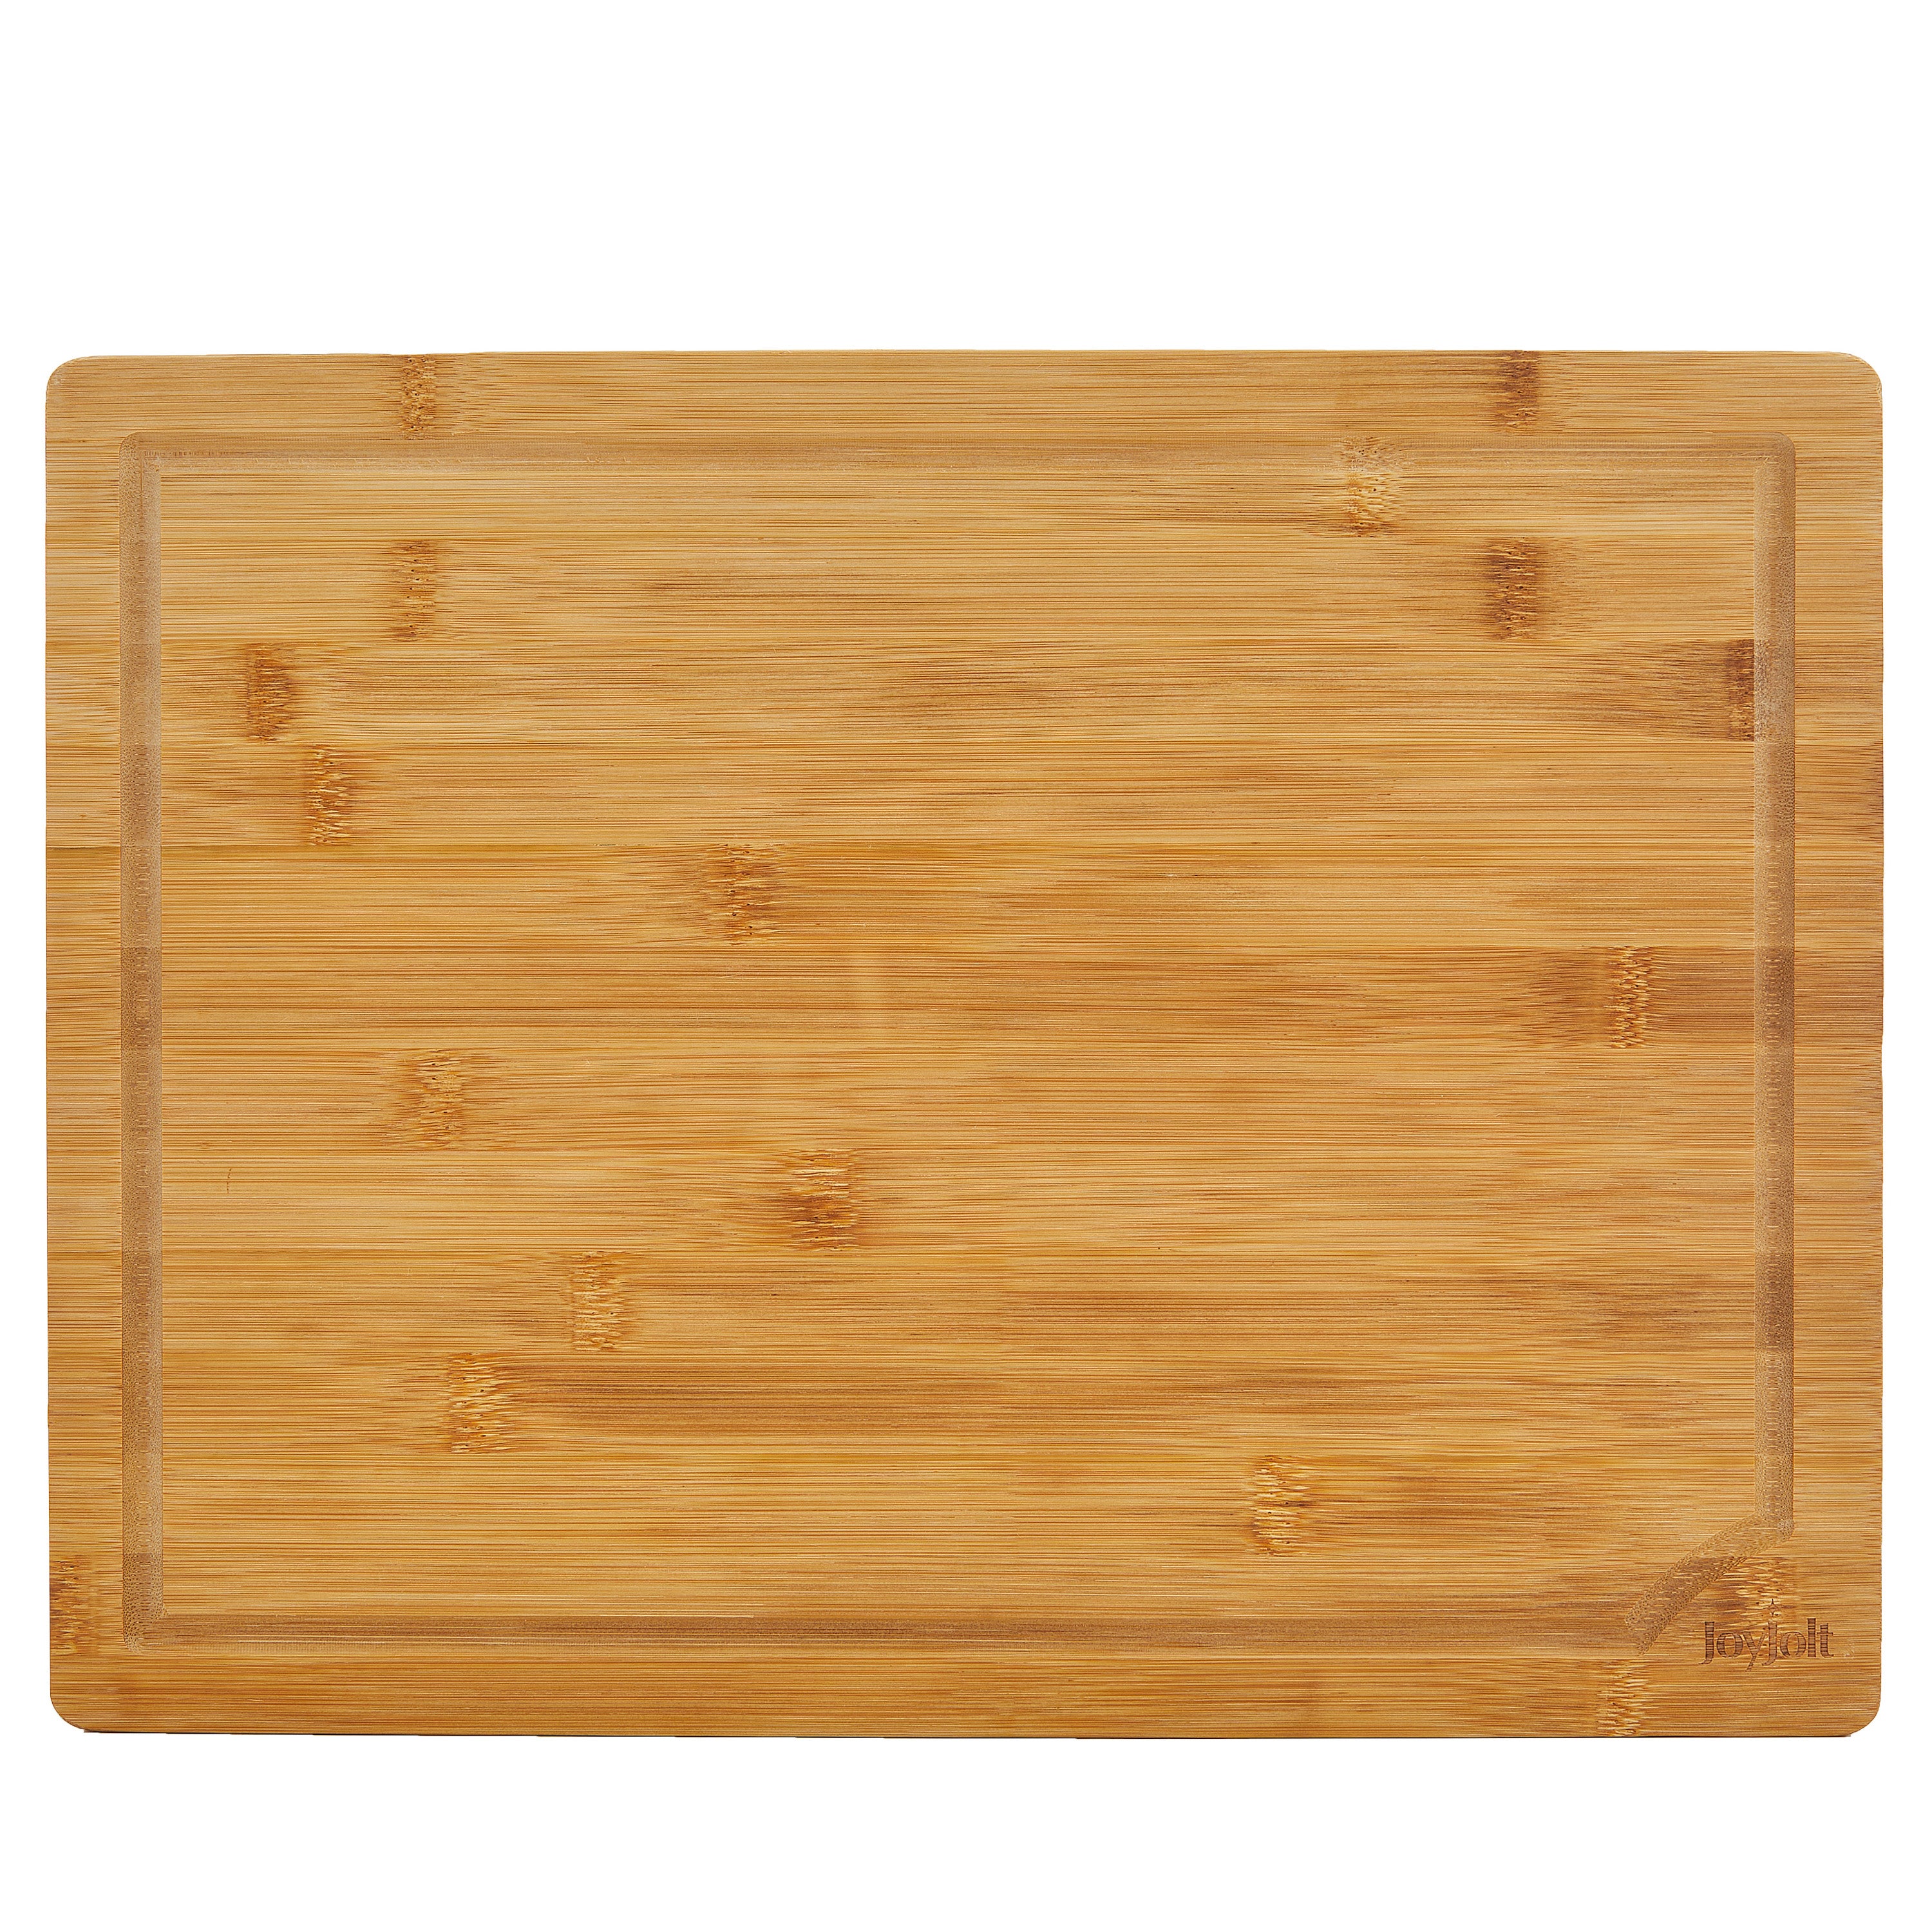 JoyJolt 3 Piece Bamboo Kitchen Cutting Board Set